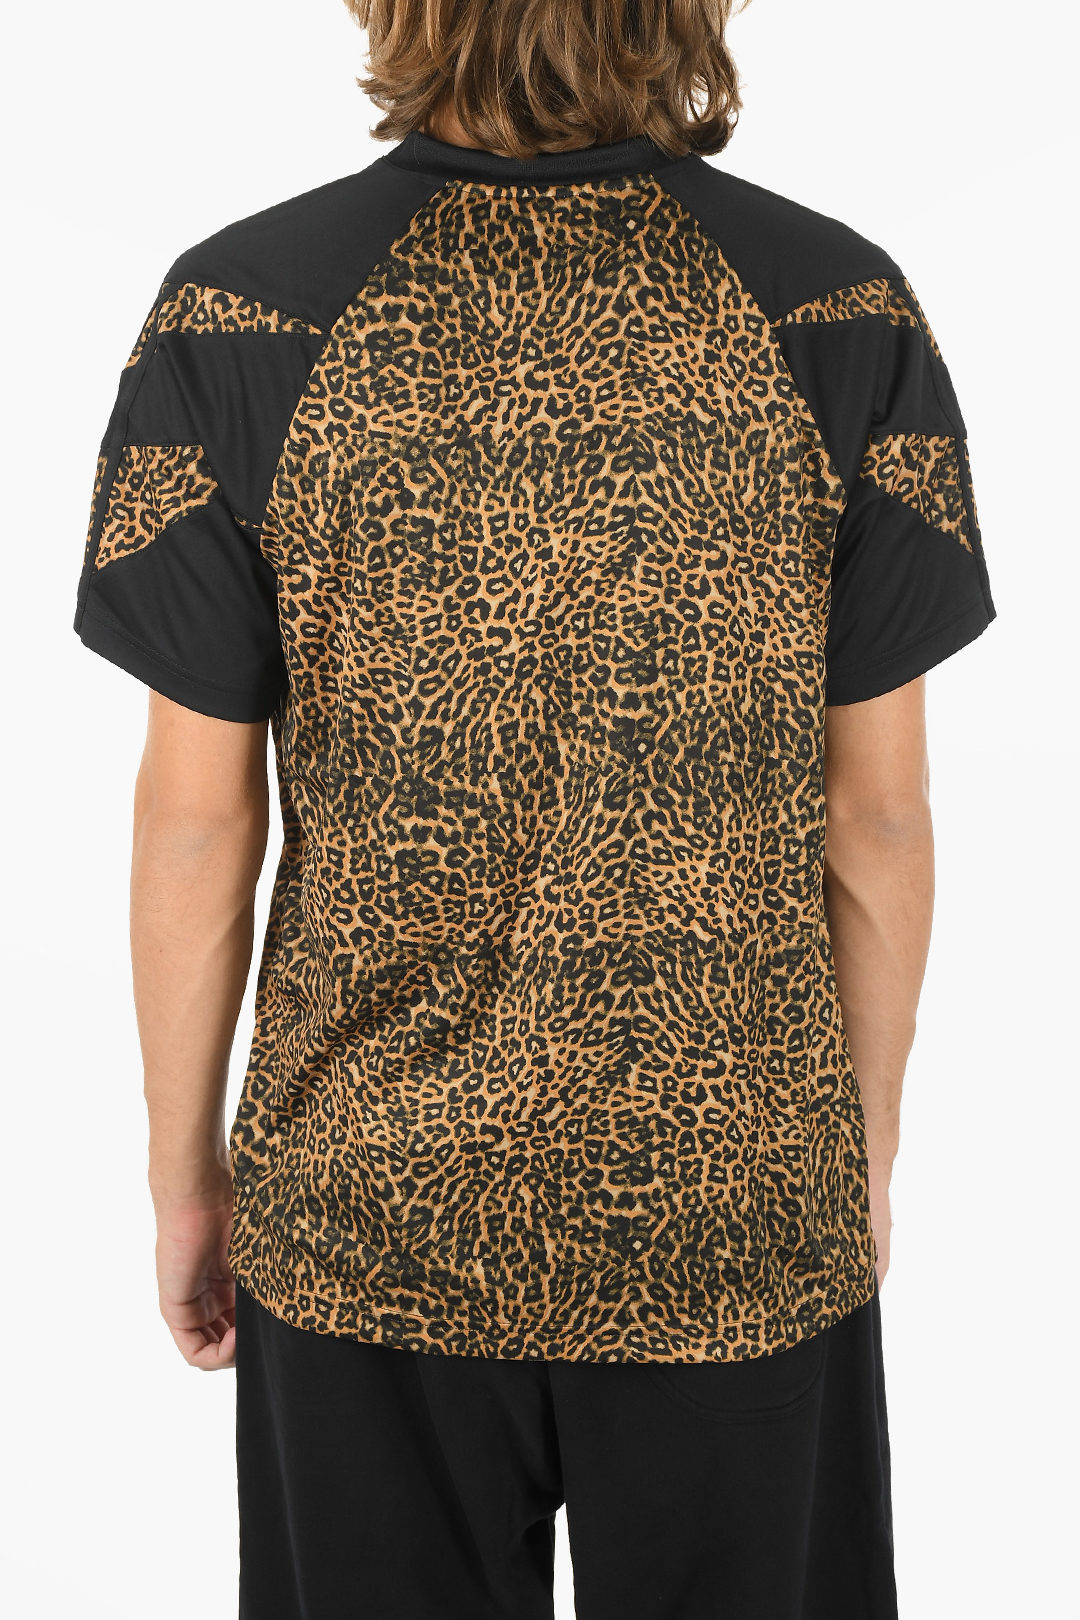 Adidas Animal Printed Crew-Neck T-shirt men - Glamood Outlet